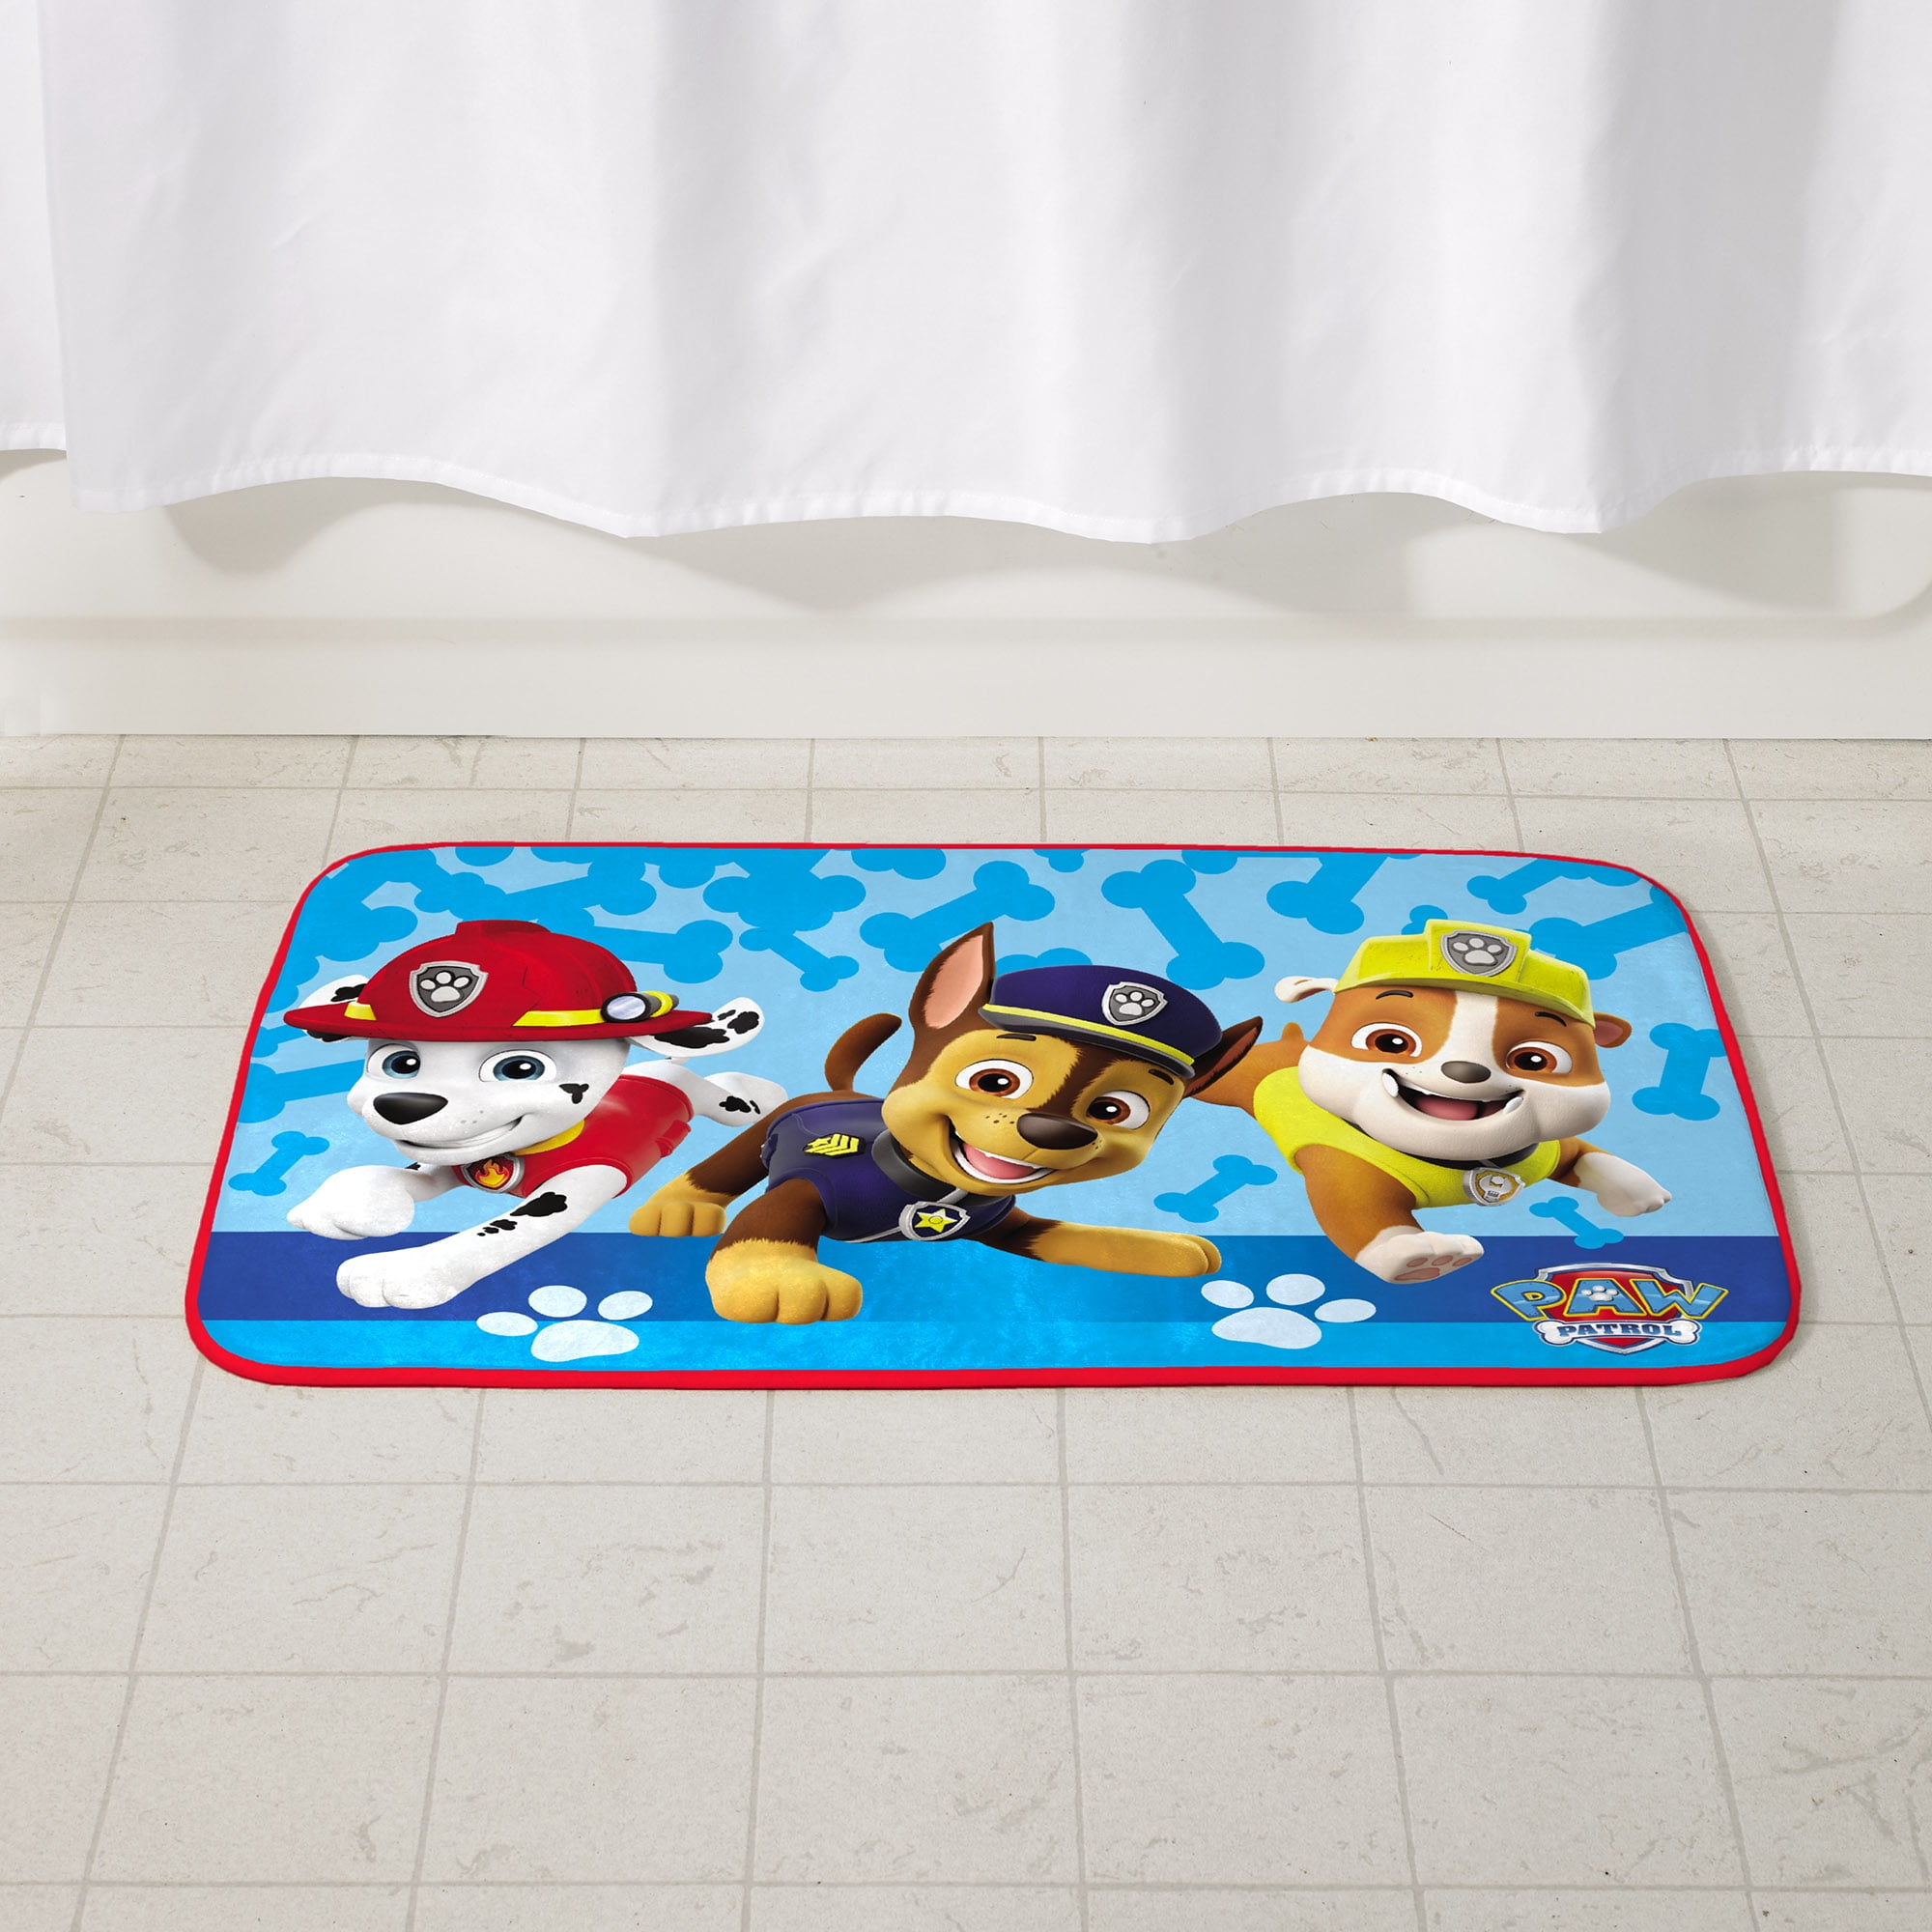 Super Mario Bro Maker Anime Game Indoor Outdoor Rug Mat Anti-Slip Floor Bath Mat 